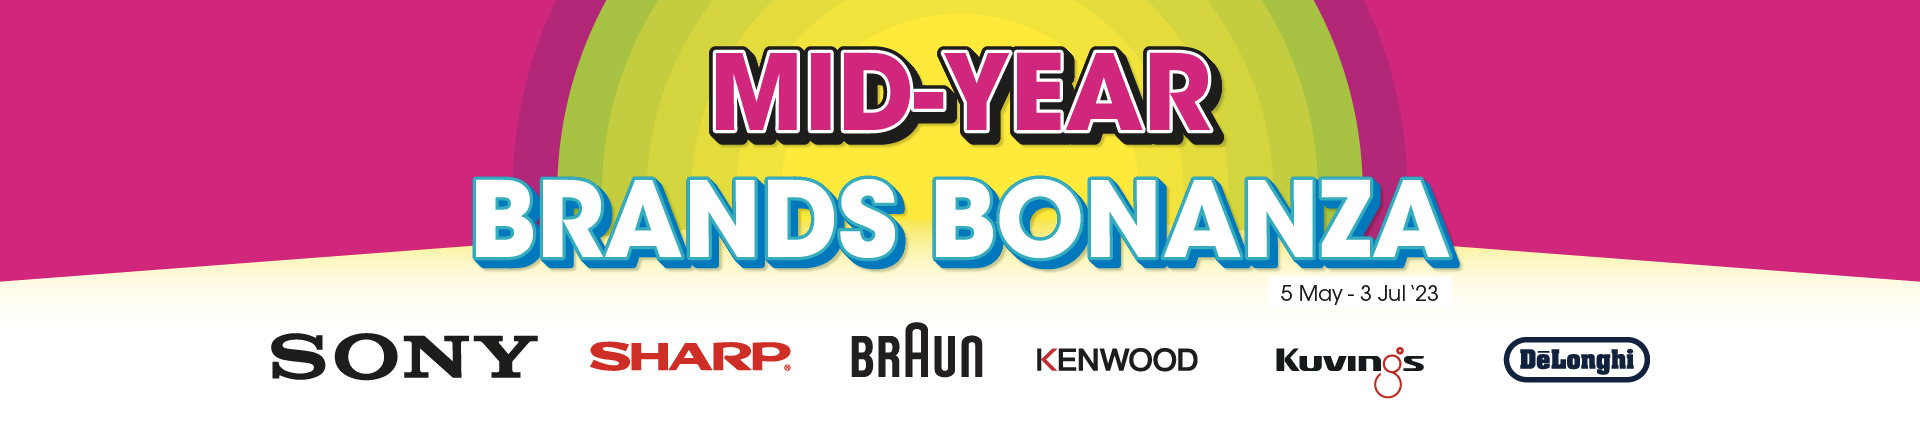 Mid-Year Brands Bonanza